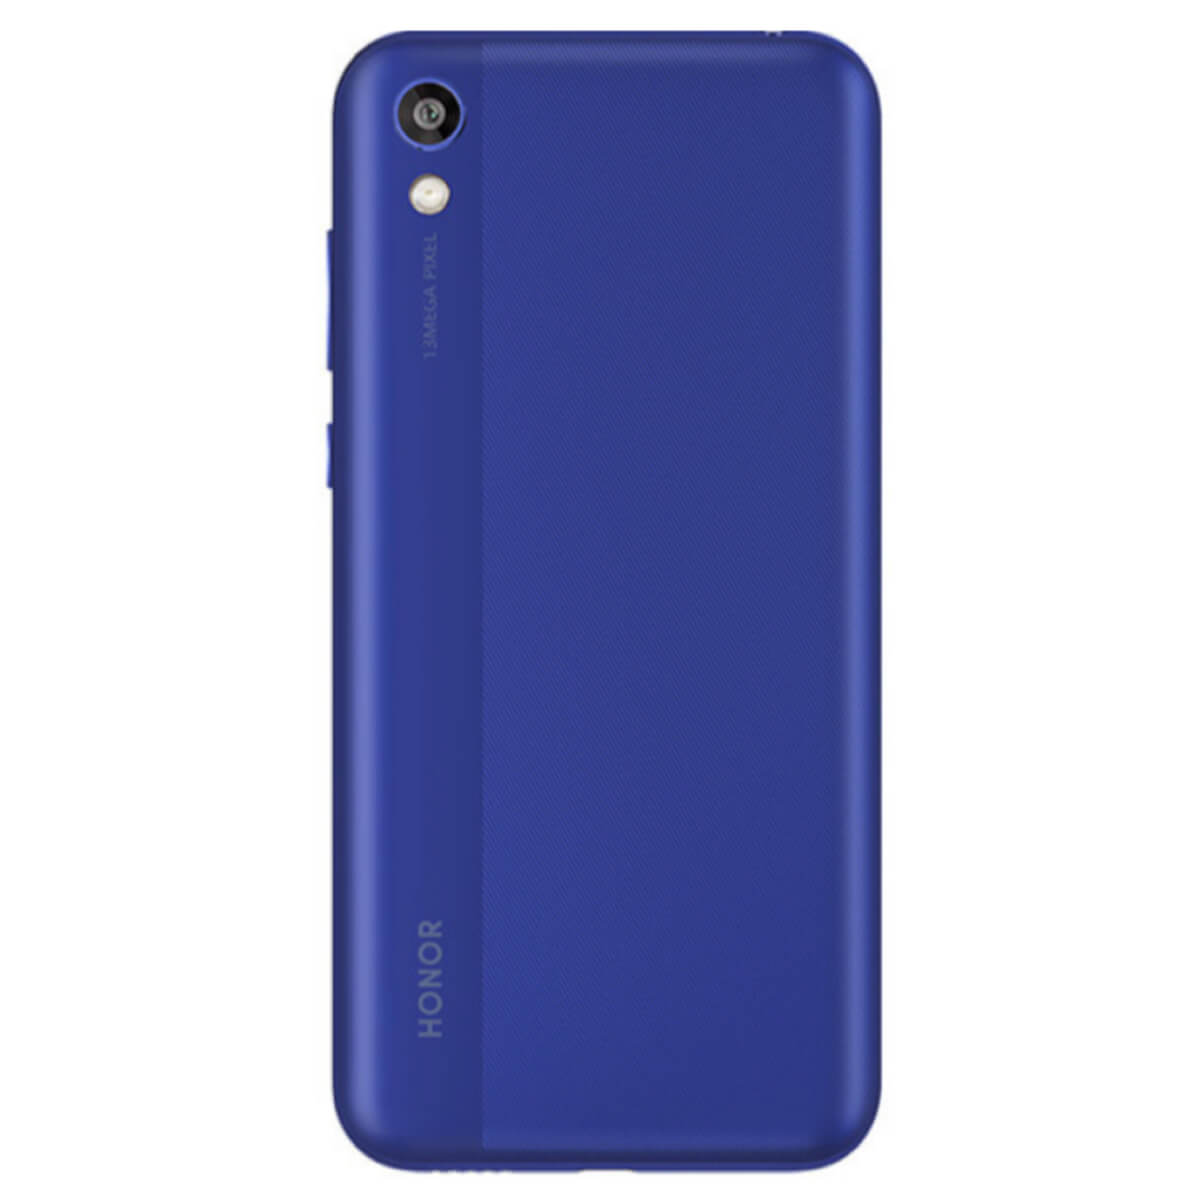 Honor 8S (2GB Ram 32GB Storage) 5.71" HD Display, 13MP Rear Camera, 5MP Front Camera - Blue